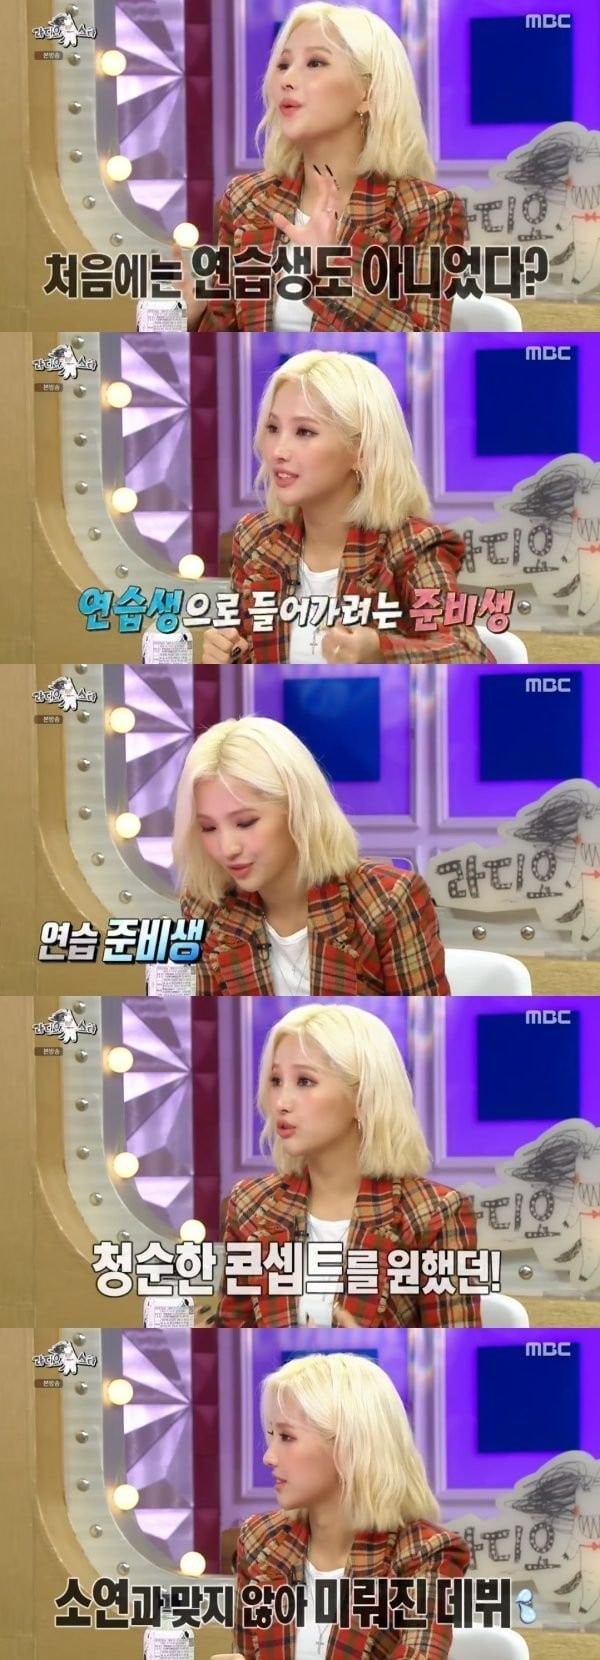 Участница (G)I-DLE, Соён, рассказала о трёх уровнях стажеров в Cube Entertainment